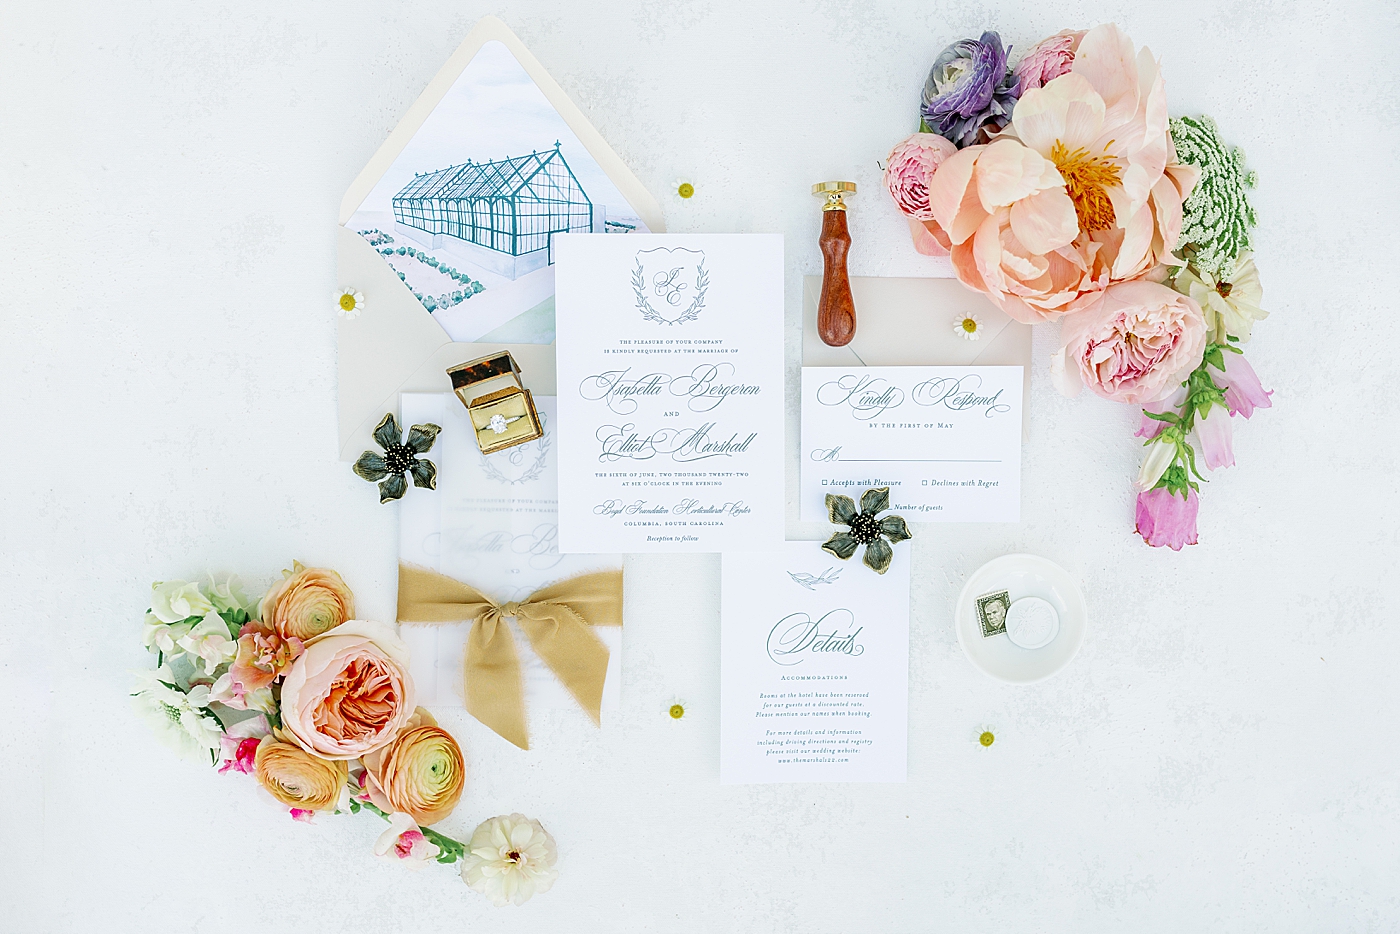 Wedding invitations from summer inspired garden wedding | Photo by Annie Laura Photo